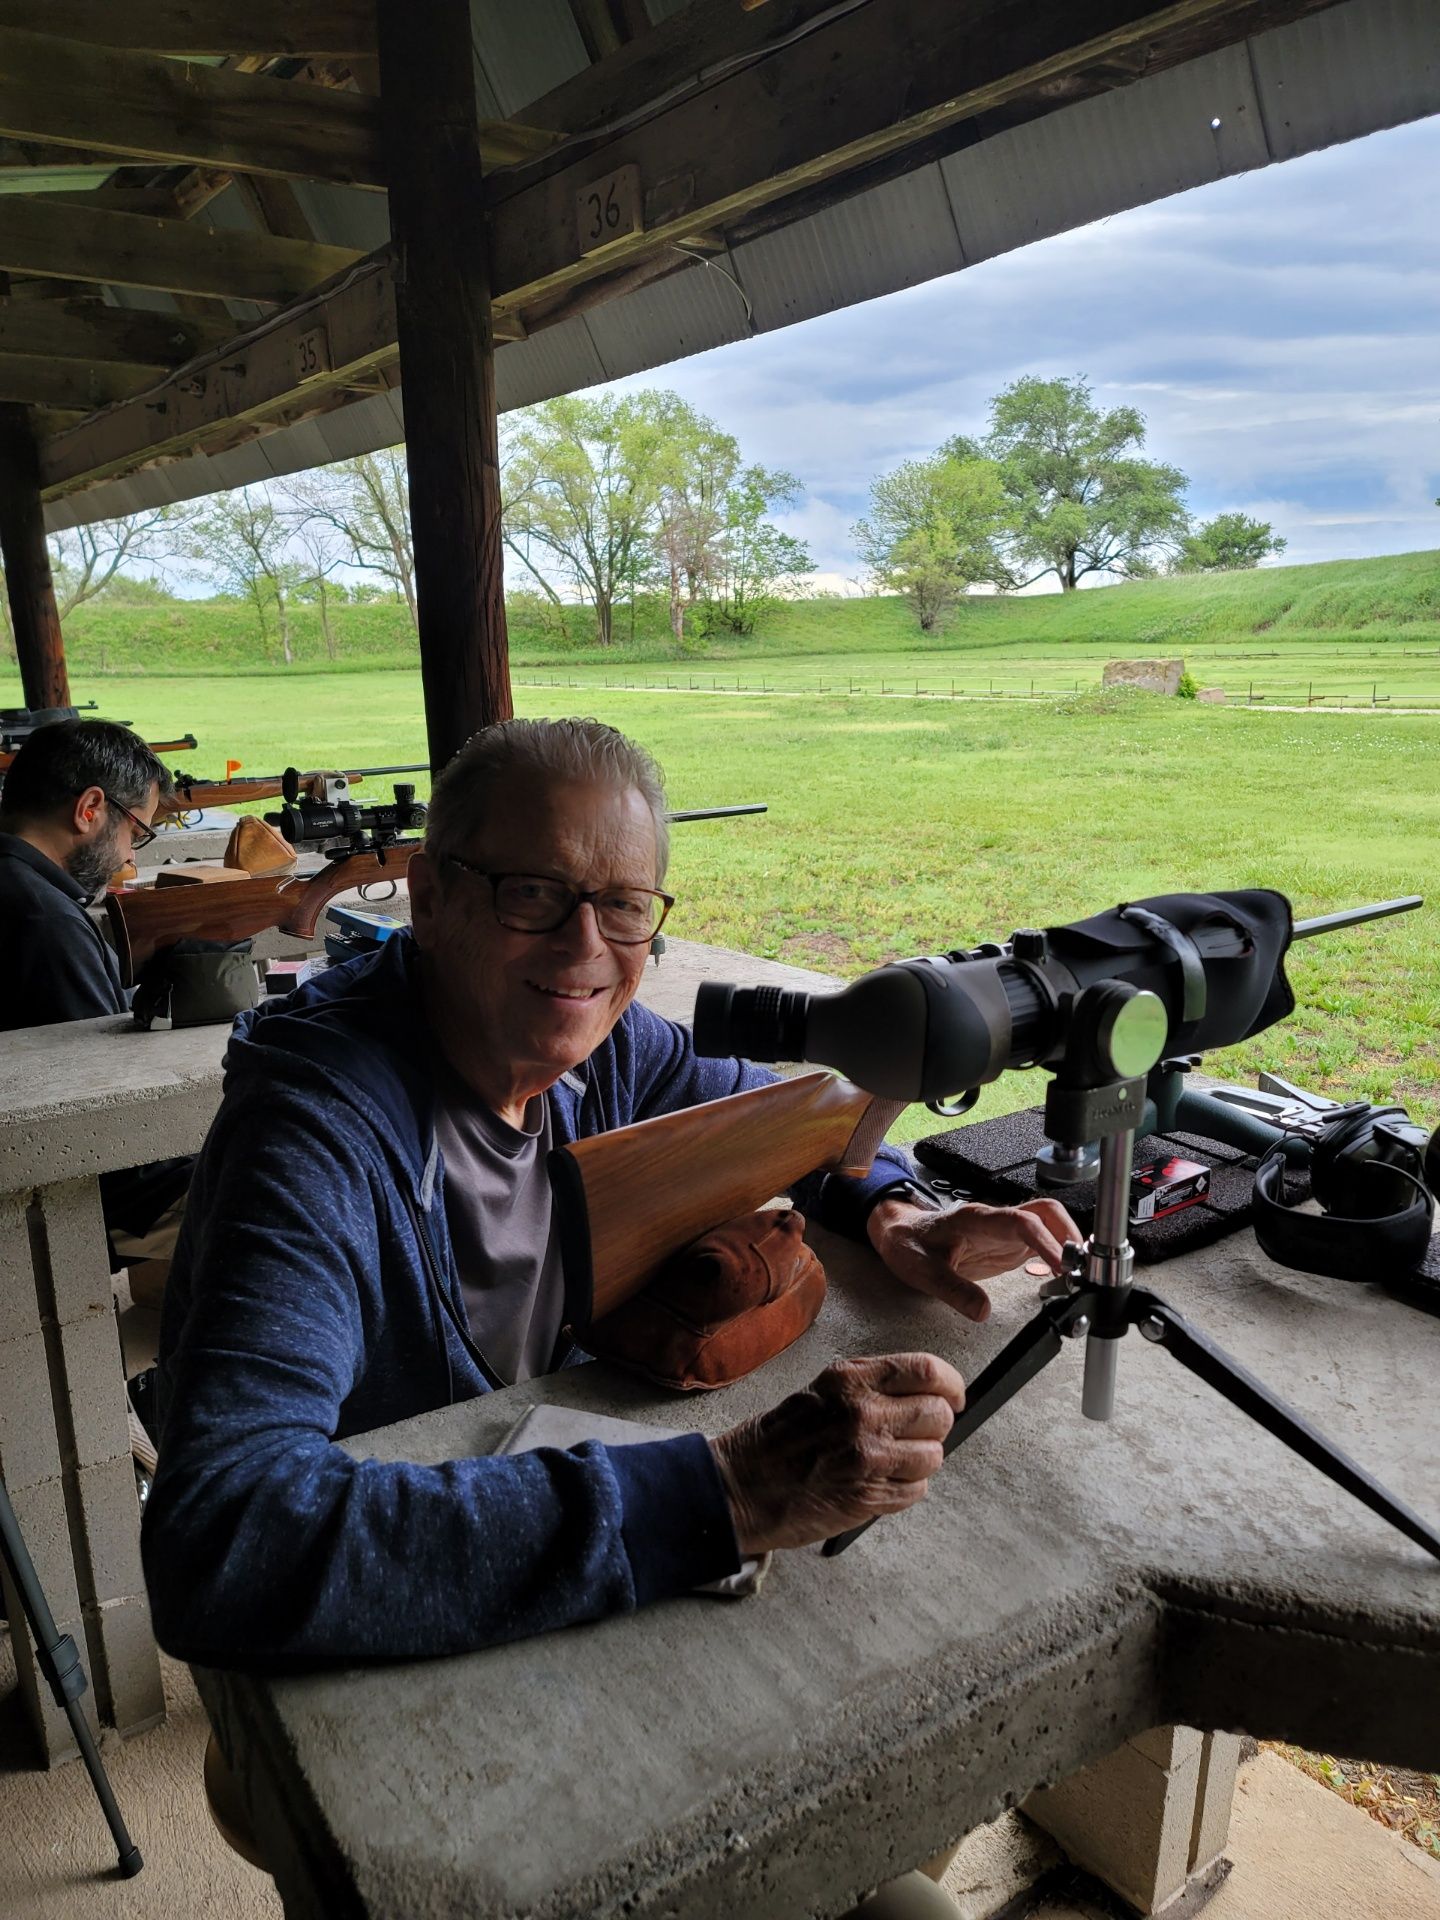 man with glasses and blue shirt posing at gun range rifle table